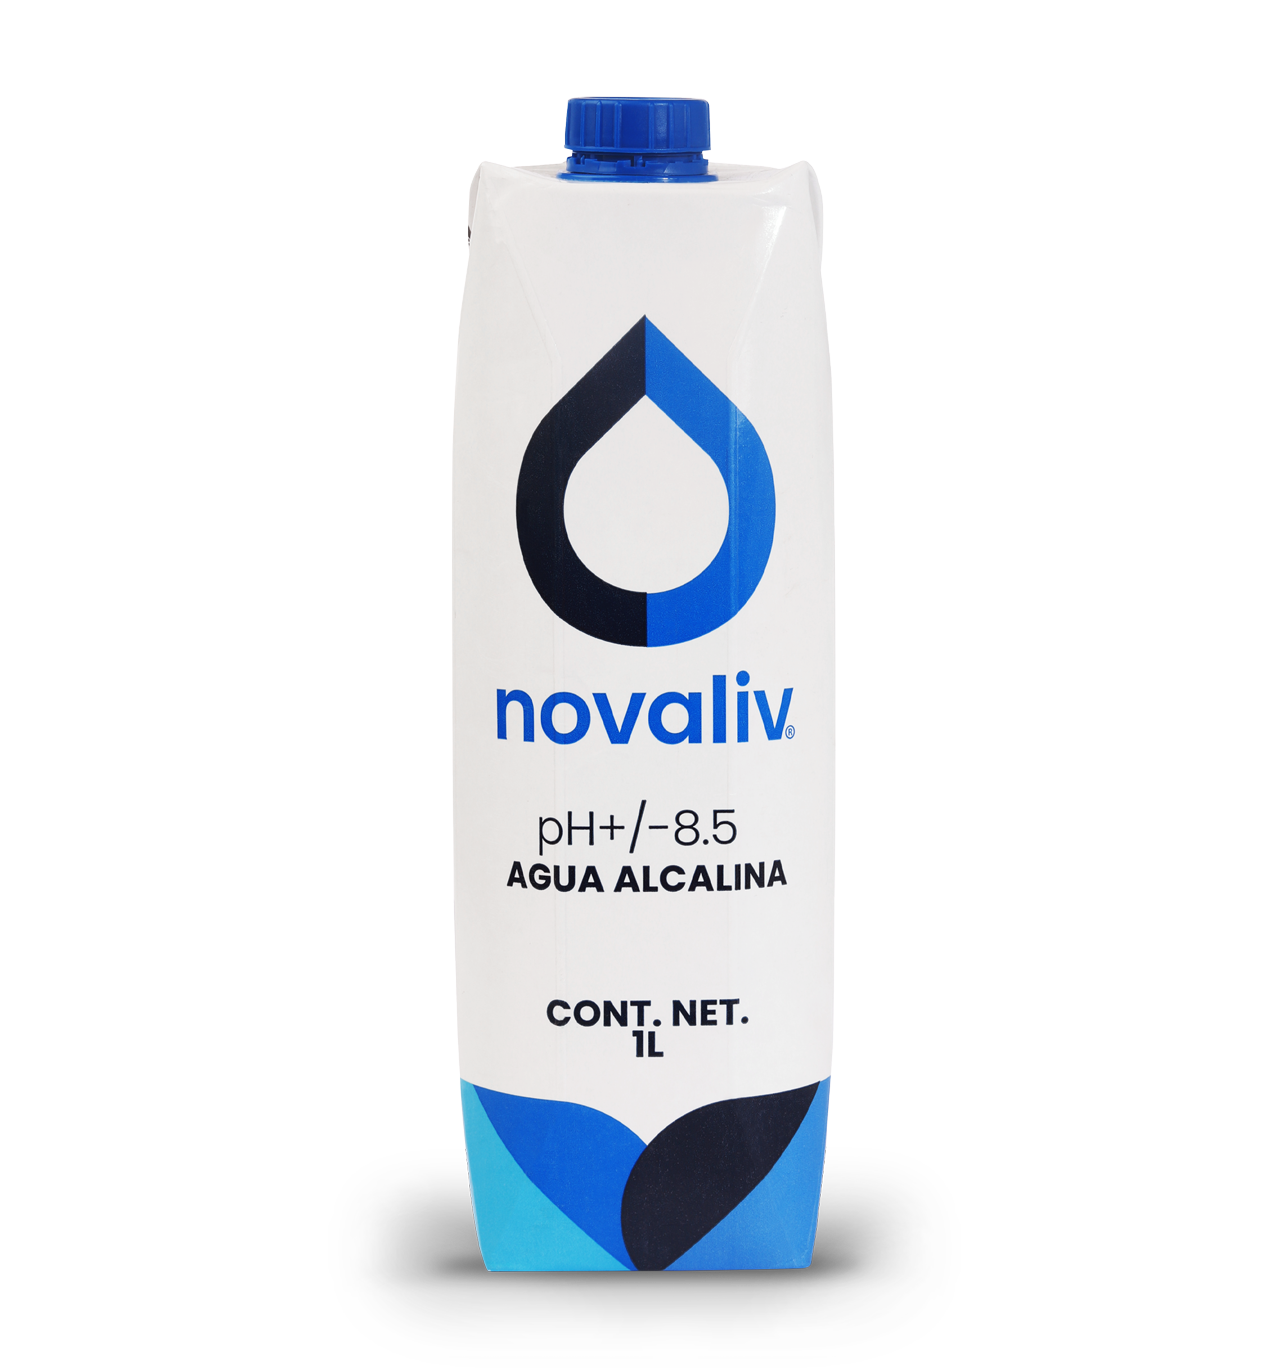 Novaliv Agua Alcalina TetraPak 12 x 1 L - Novaliv